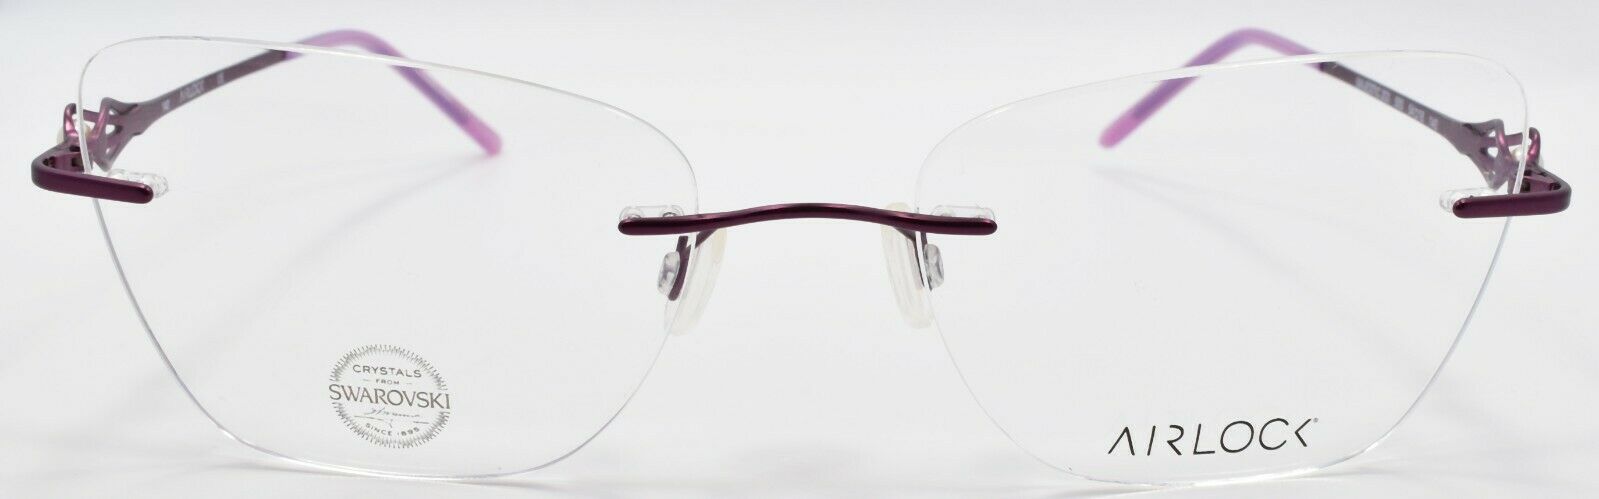 2-Airlock Majestic 203 500 Women's Eyeglasses Frames Rimless 54-18-140 Violet-886895347044-IKSpecs